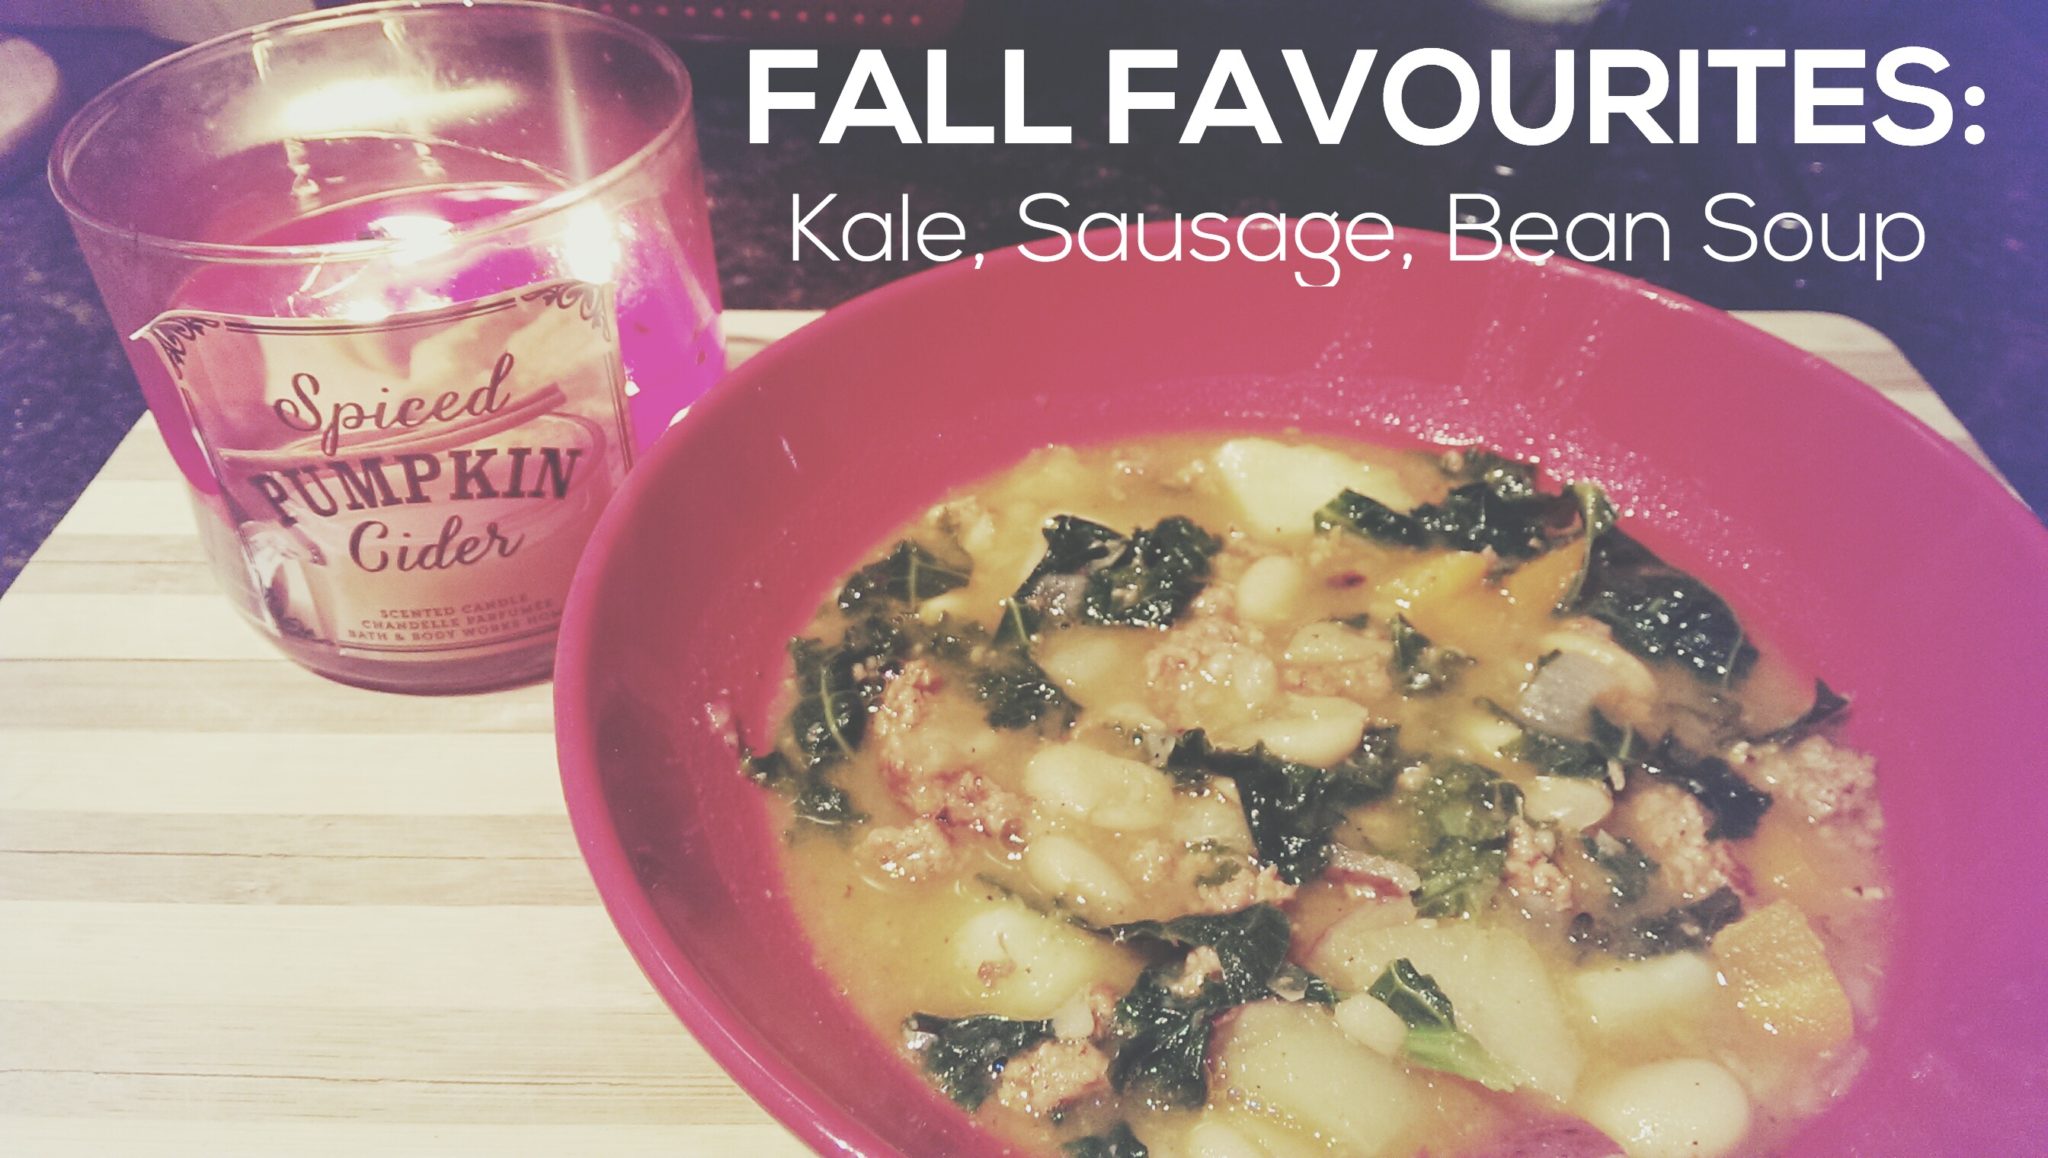 kale, carrot, potato, soup, fall, bean, autumn, recipe, kitchen,cooking, onion, garlic, chef